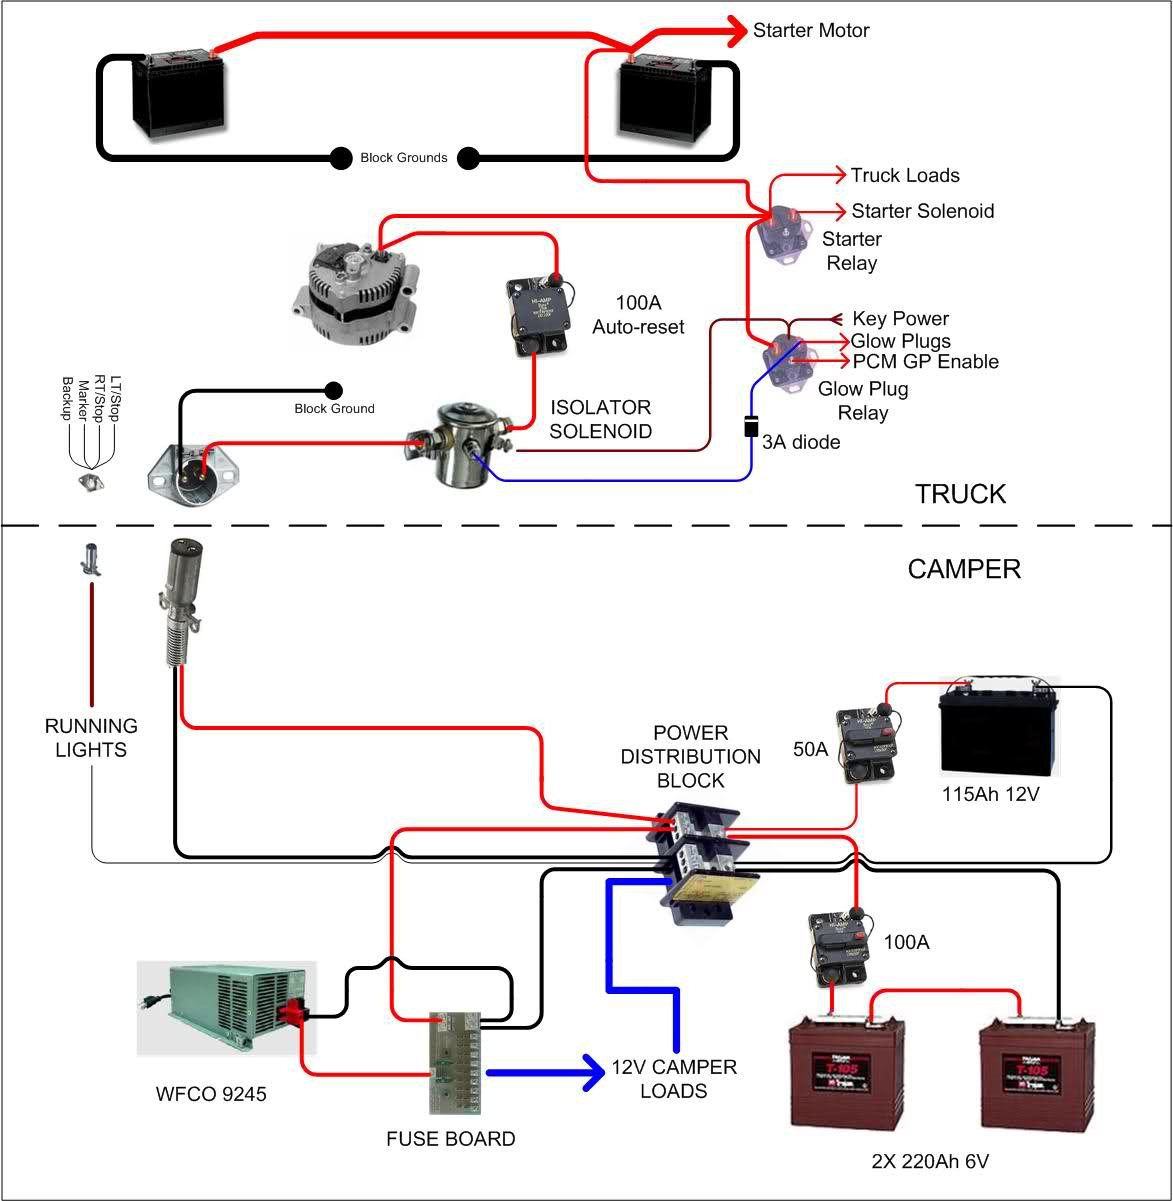 Travel Trailer Converter Wiring Diagram | Wiring Diagram - Travel Trailer Wiring Diagram